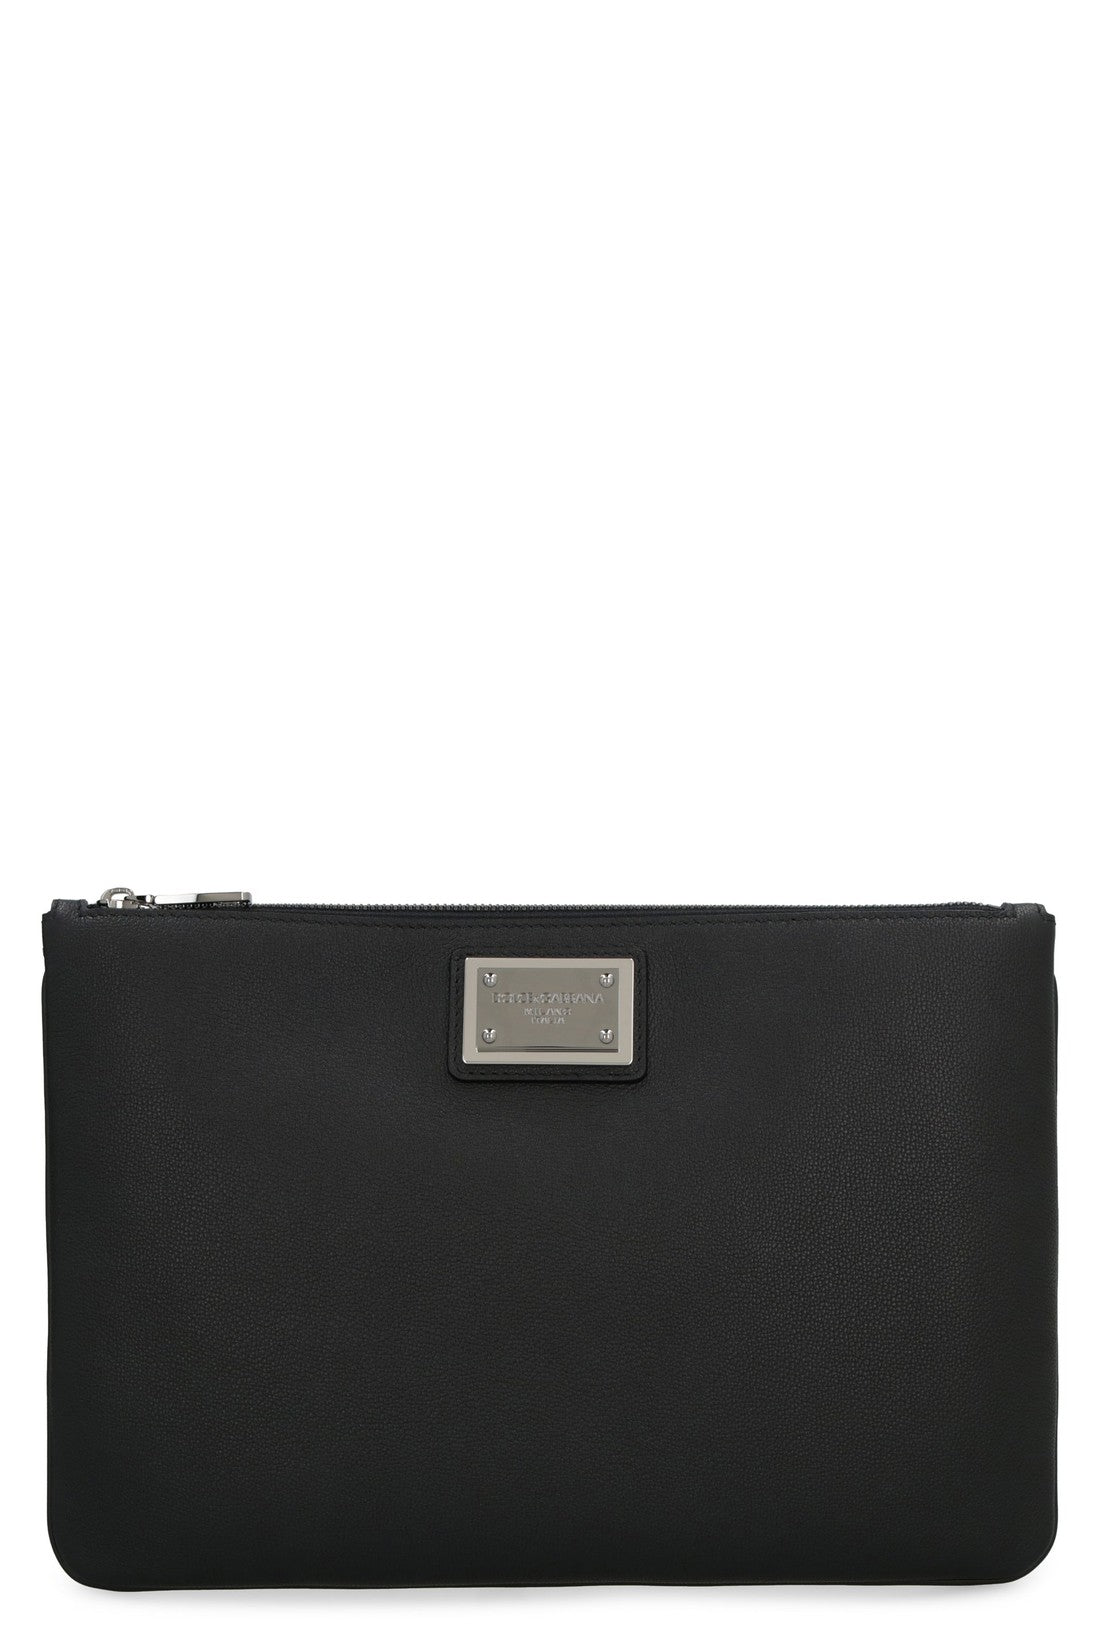 Dolce & Gabbana-OUTLET-SALE-Logo detail flat leather pouch-ARCHIVIST